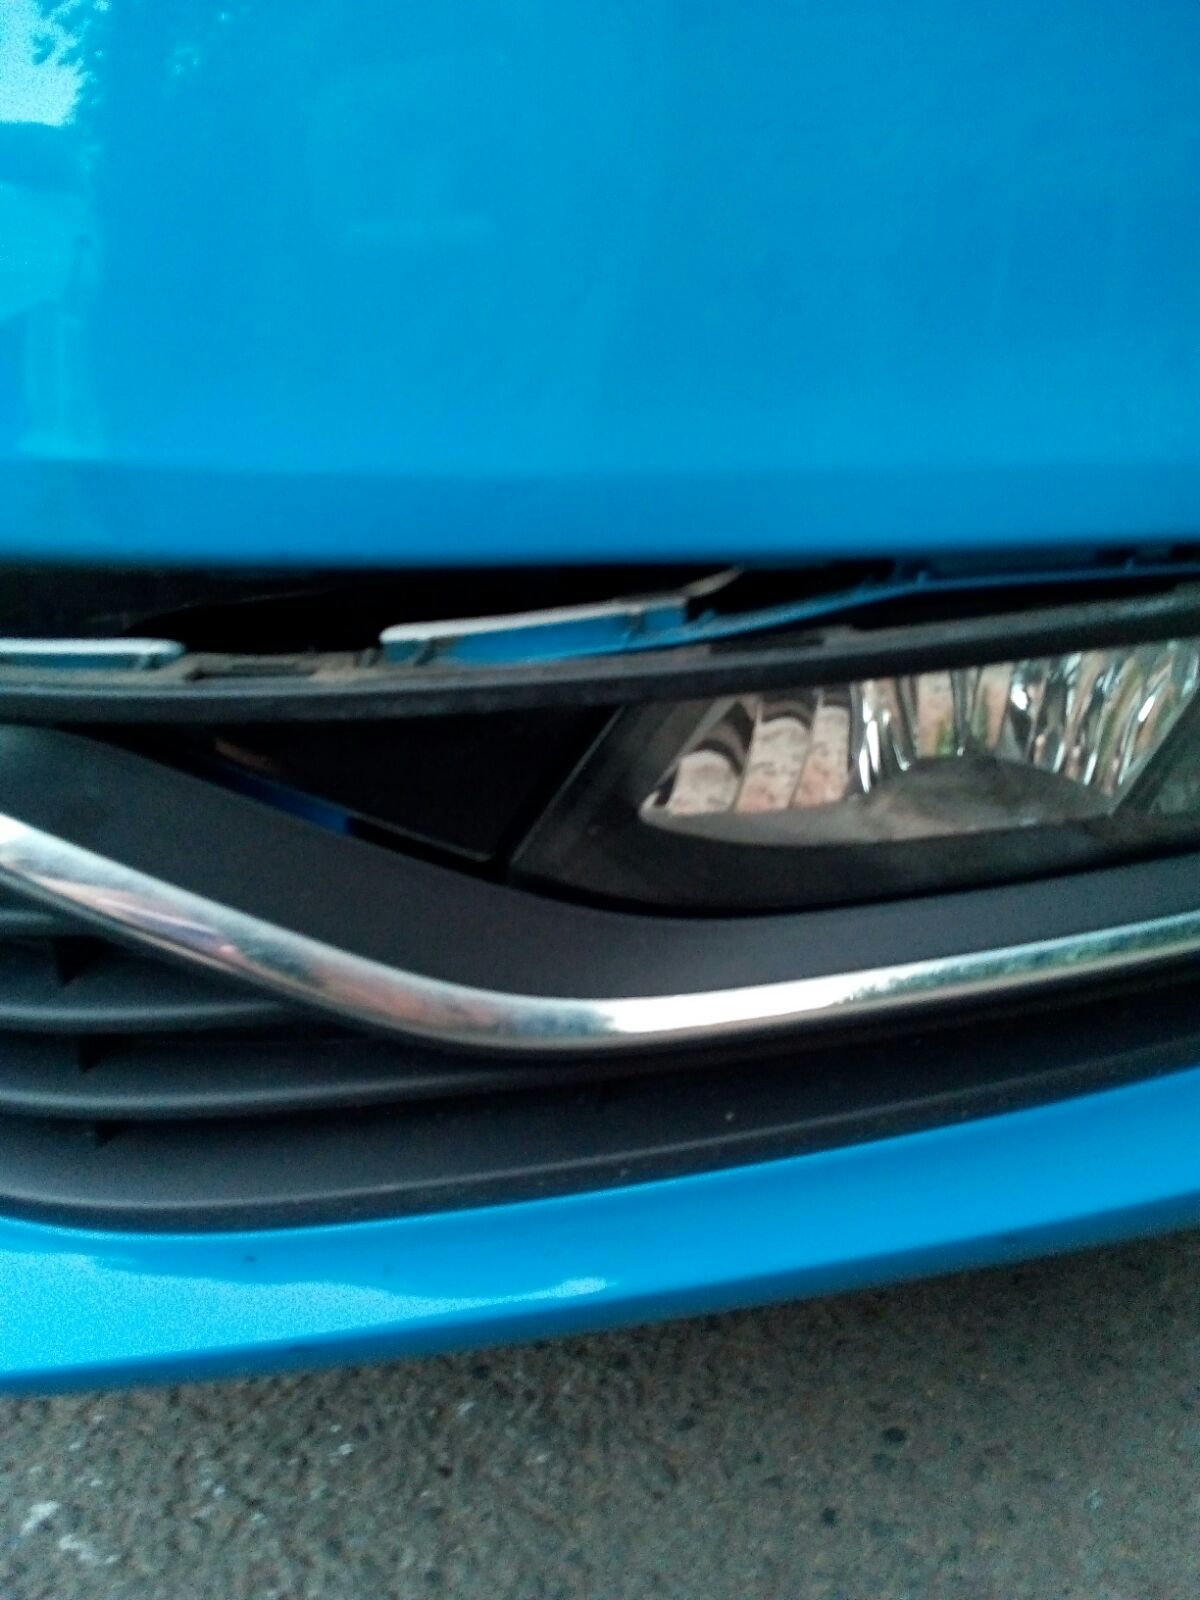 VW Polo 2015 6C facelift - front bumper repair - Page 1 - Audi, VW, Seat & Skoda - PistonHeads